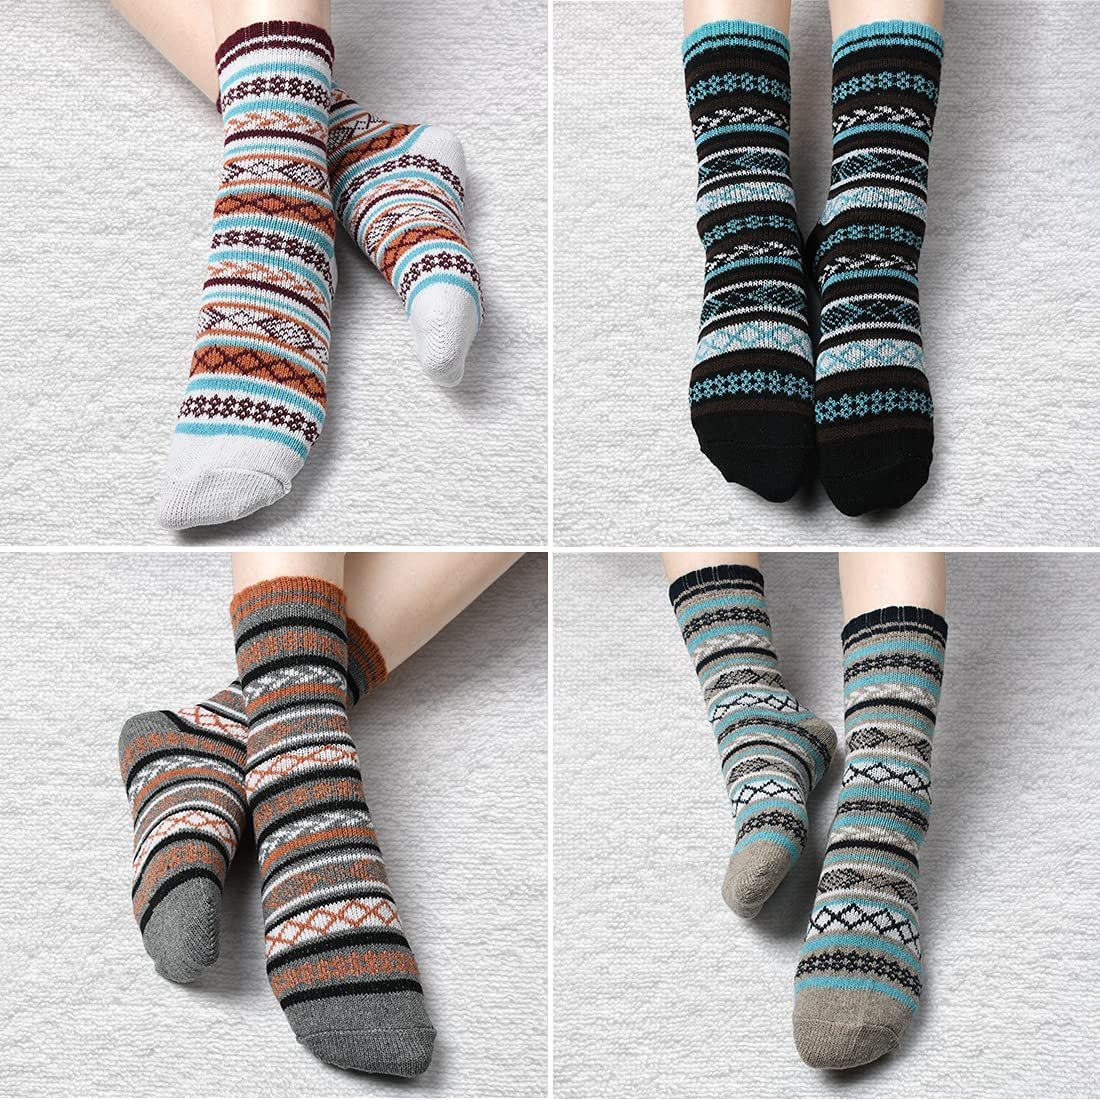 Winter Wool Socks Women Athletic Socks Cozy Knit Warm Winter Socks for Women Soft Thick Thermal Wool Crew Socks